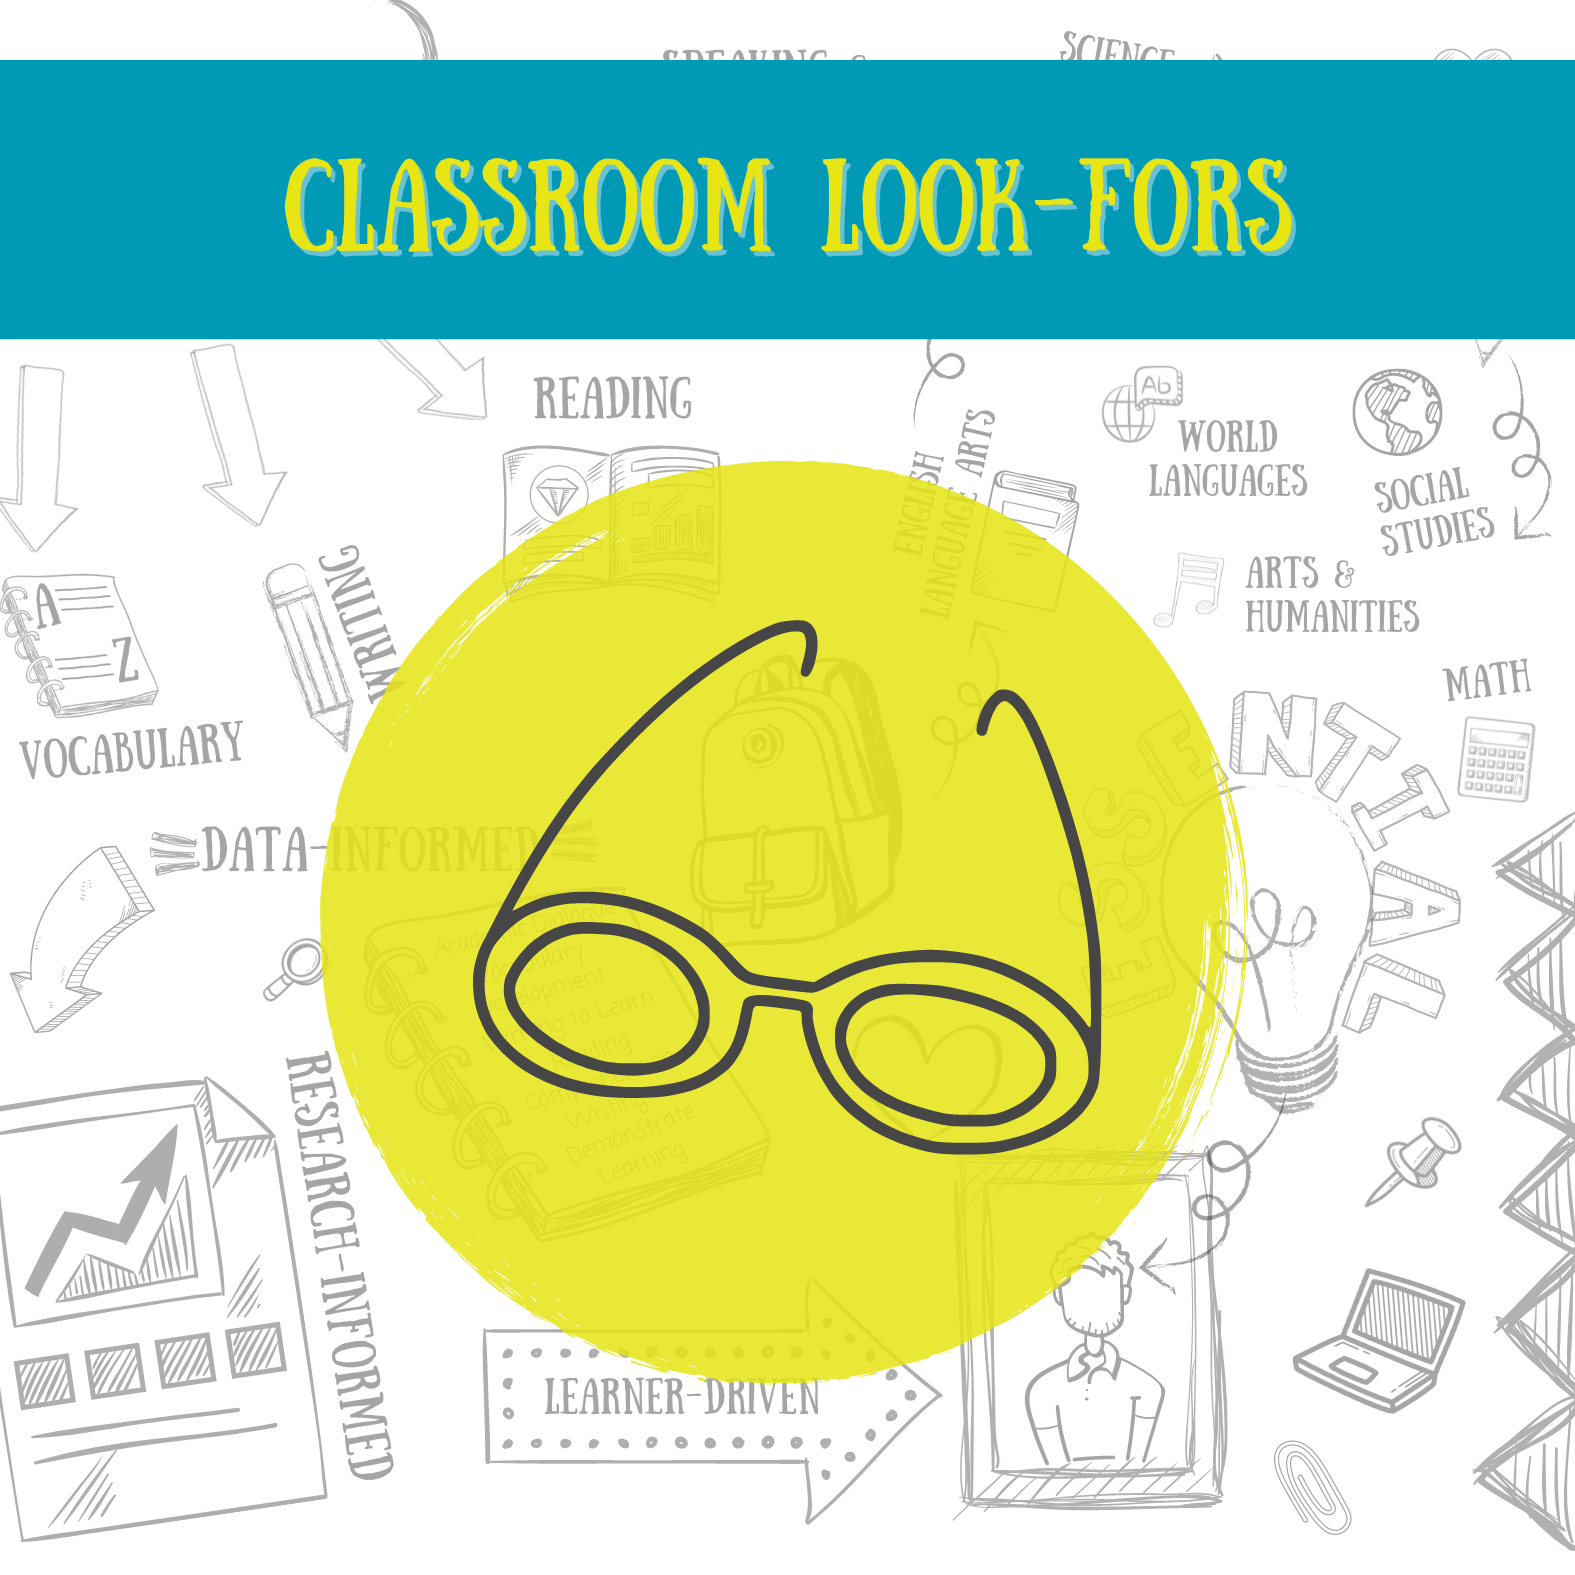 Adolescent Literacy Model- Classroom Look-fors